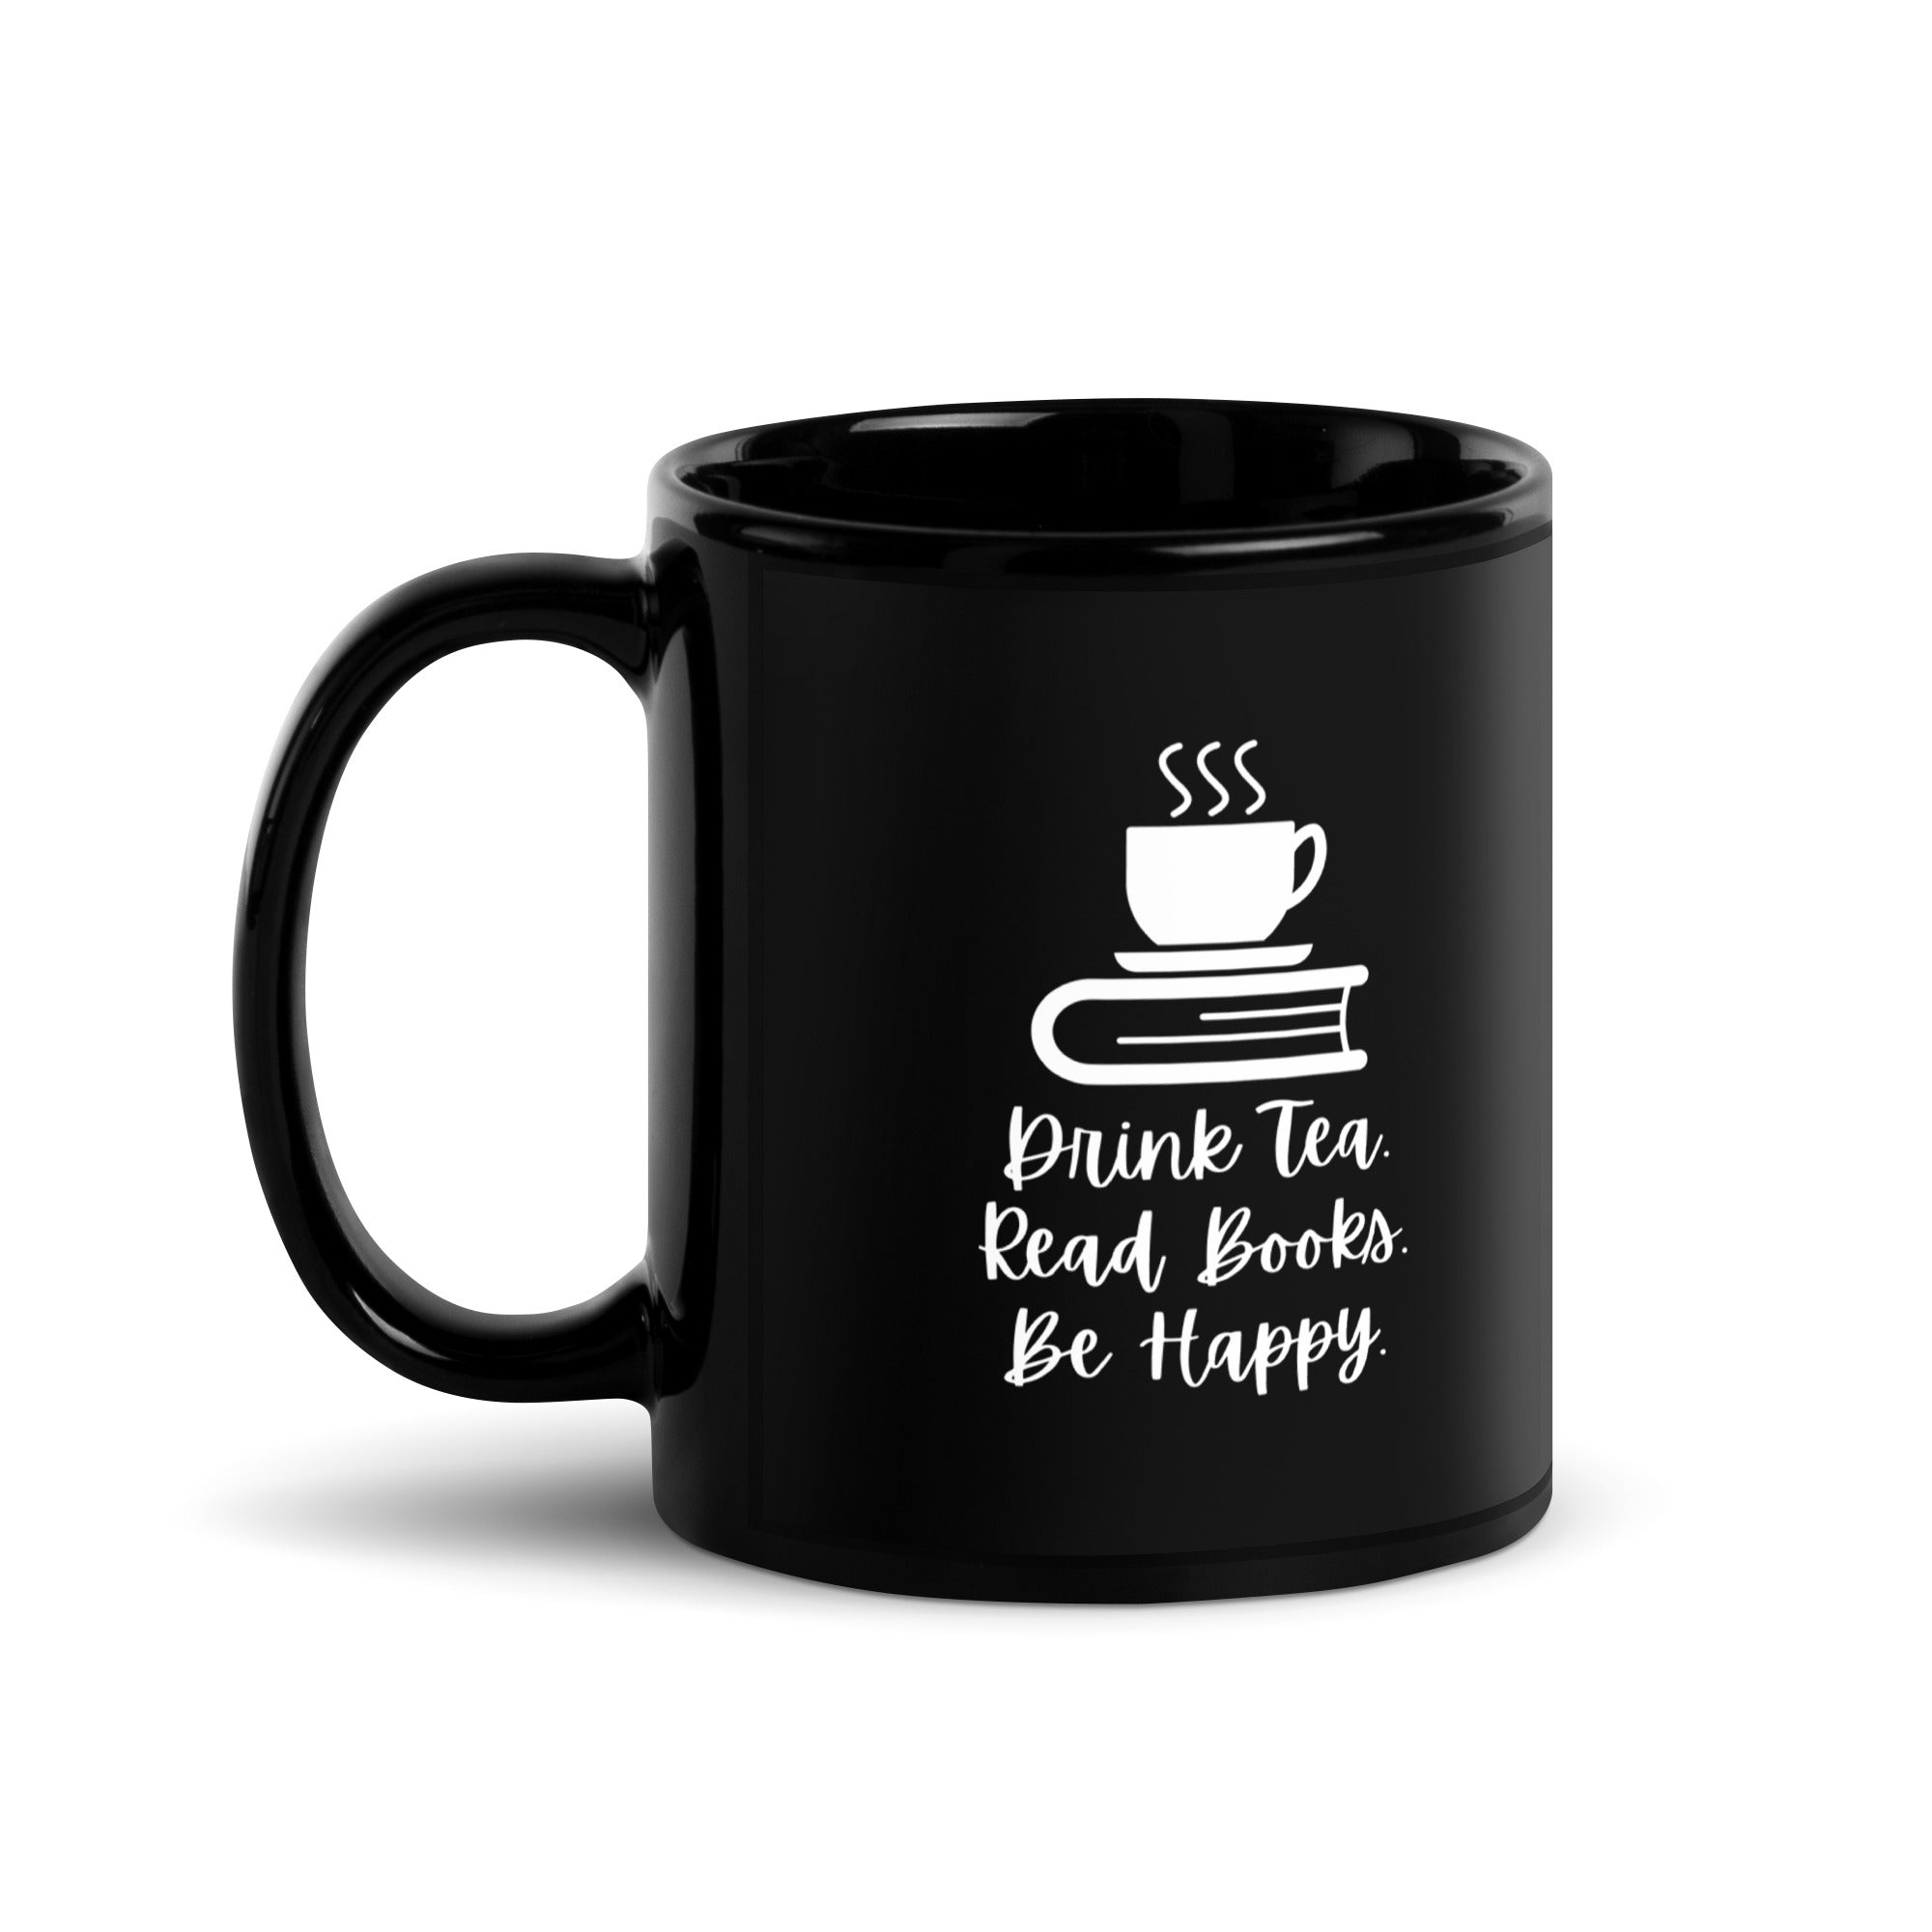 Black Glossy Mug - Drink Tea, Read Books, Be Happy (R-Handed)